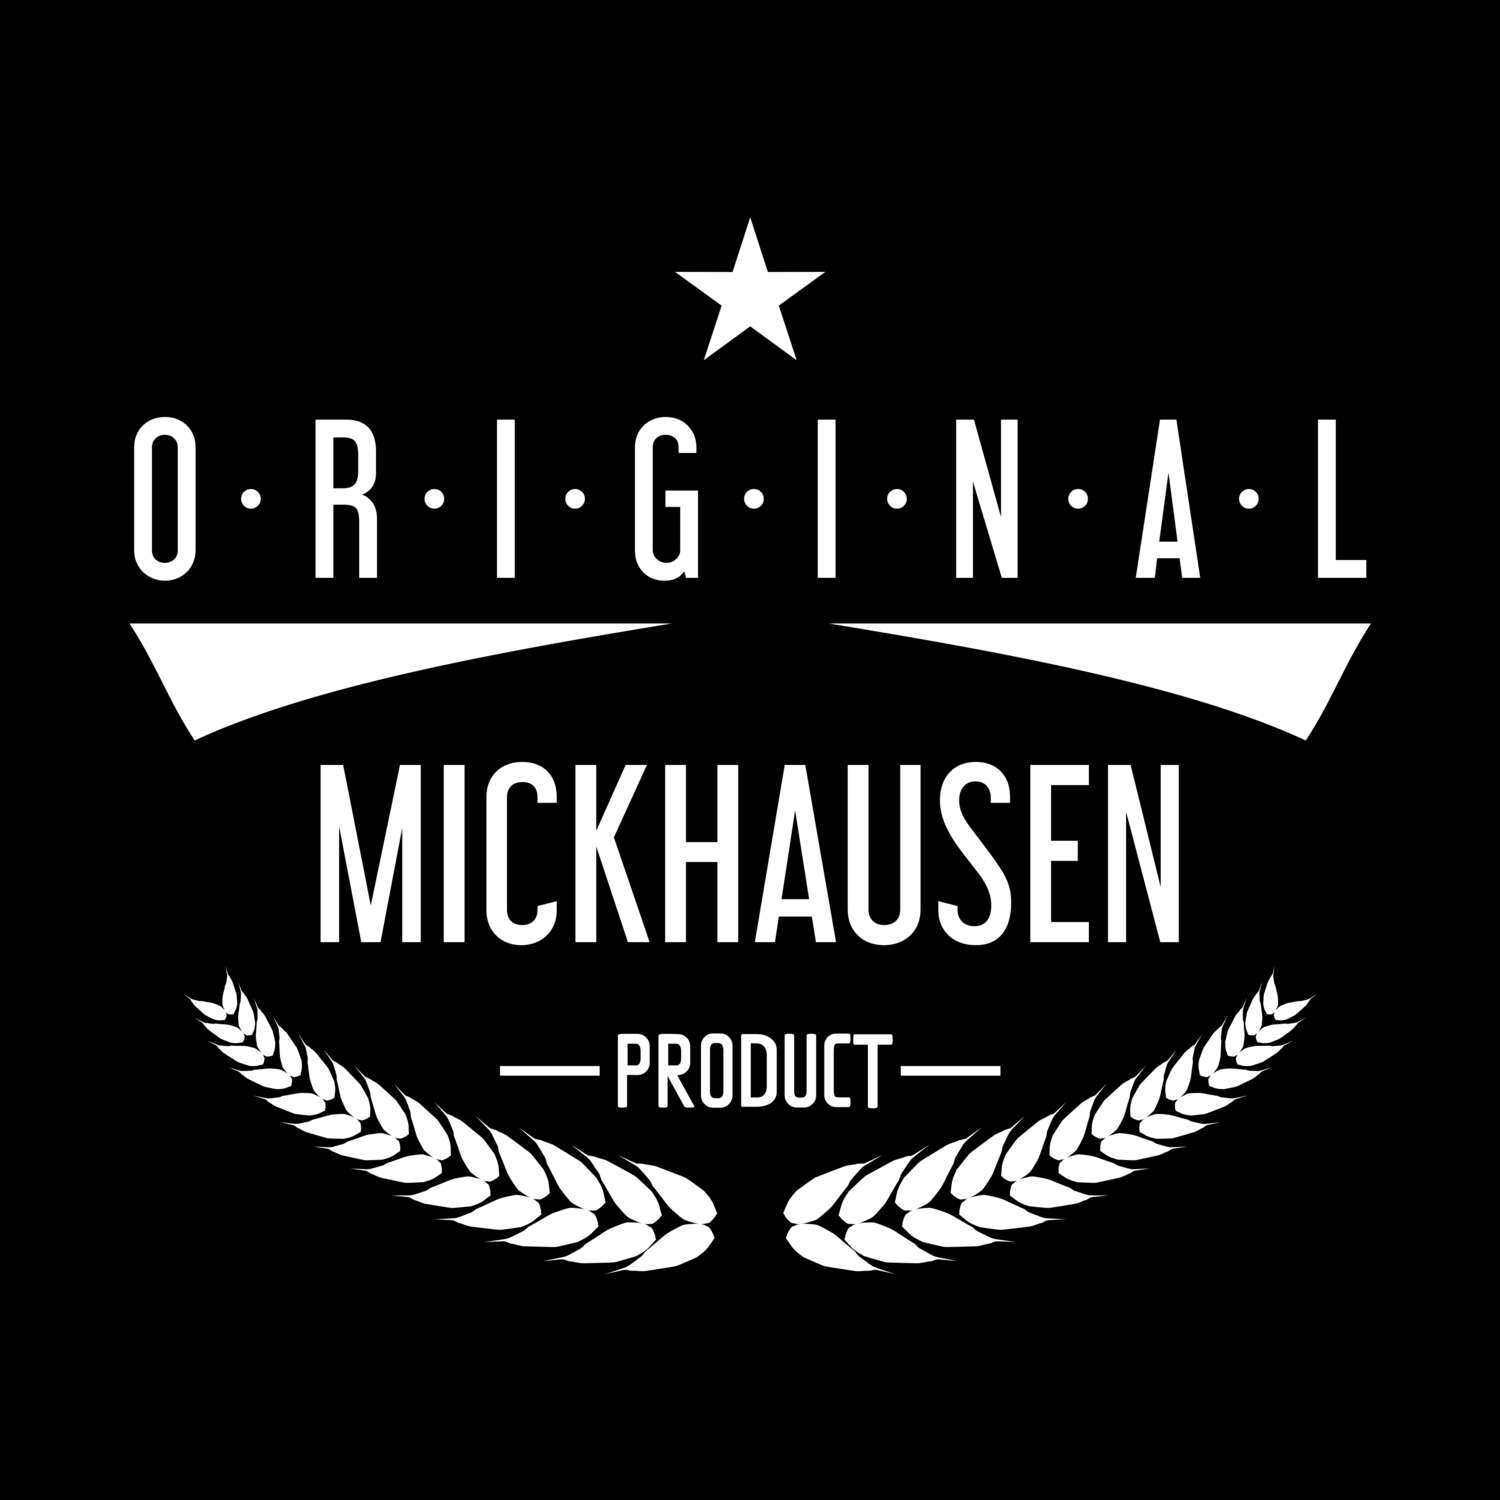 Mickhausen T-Shirt »Original Product«